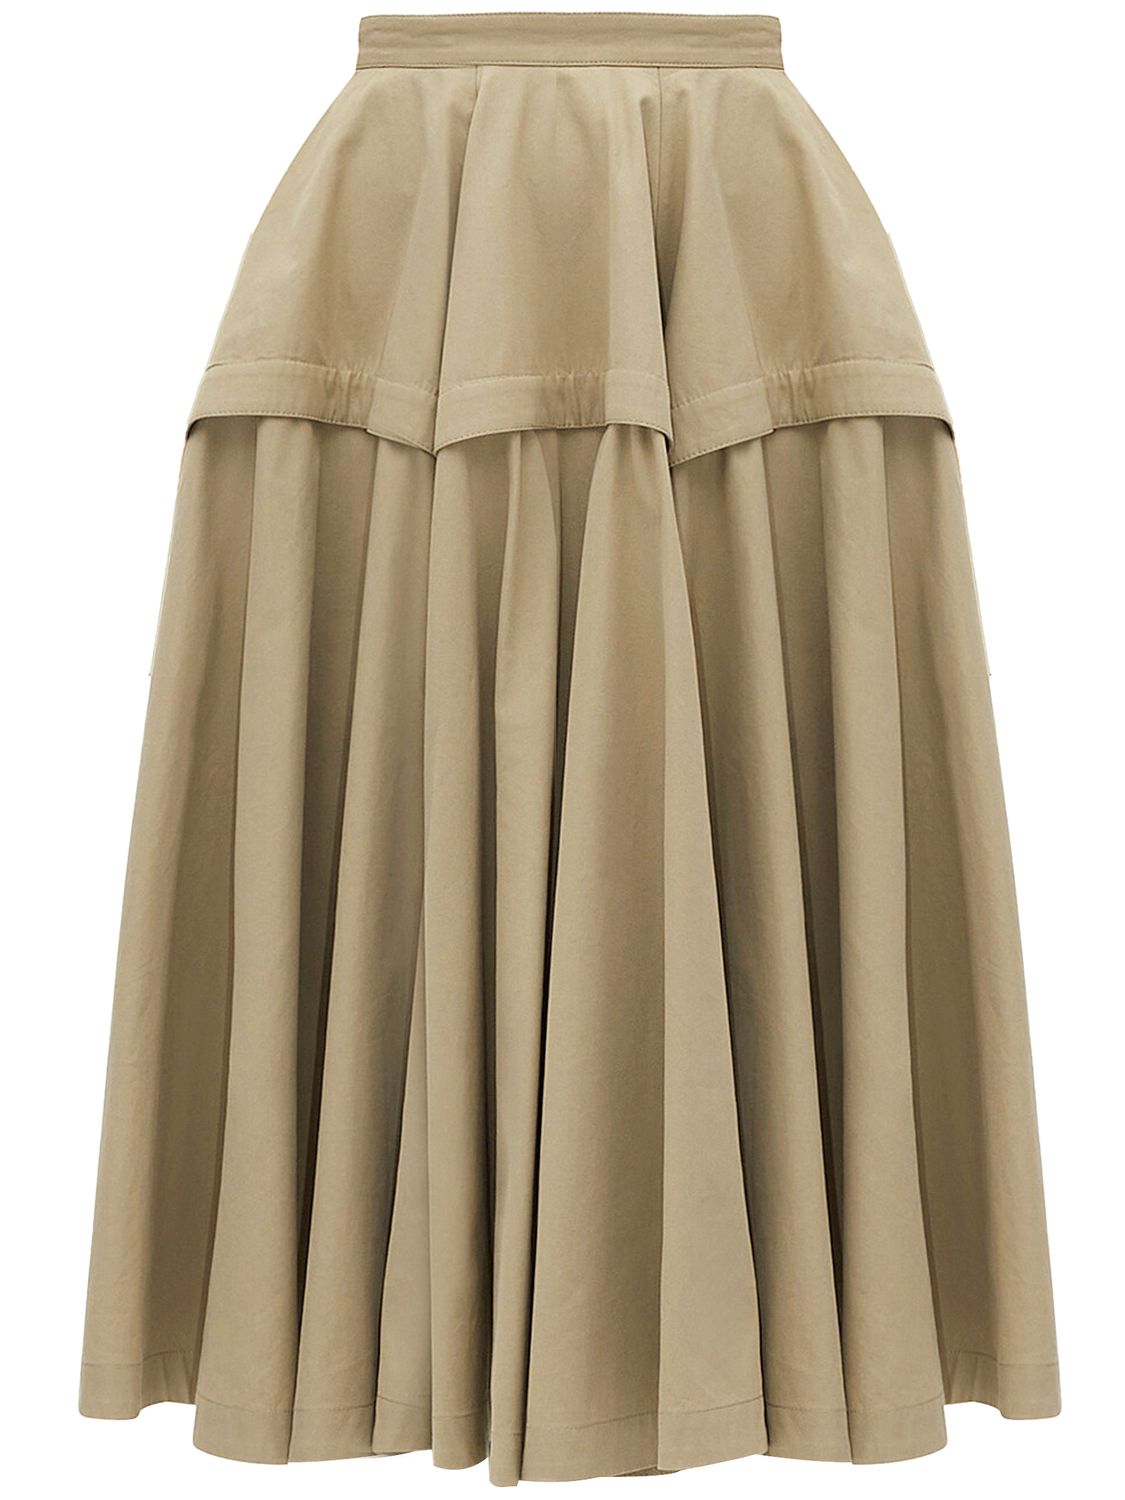 BOTTEGA VENETA Sand-Colored A-Line Skirt in Technical Compact Cotton for Women